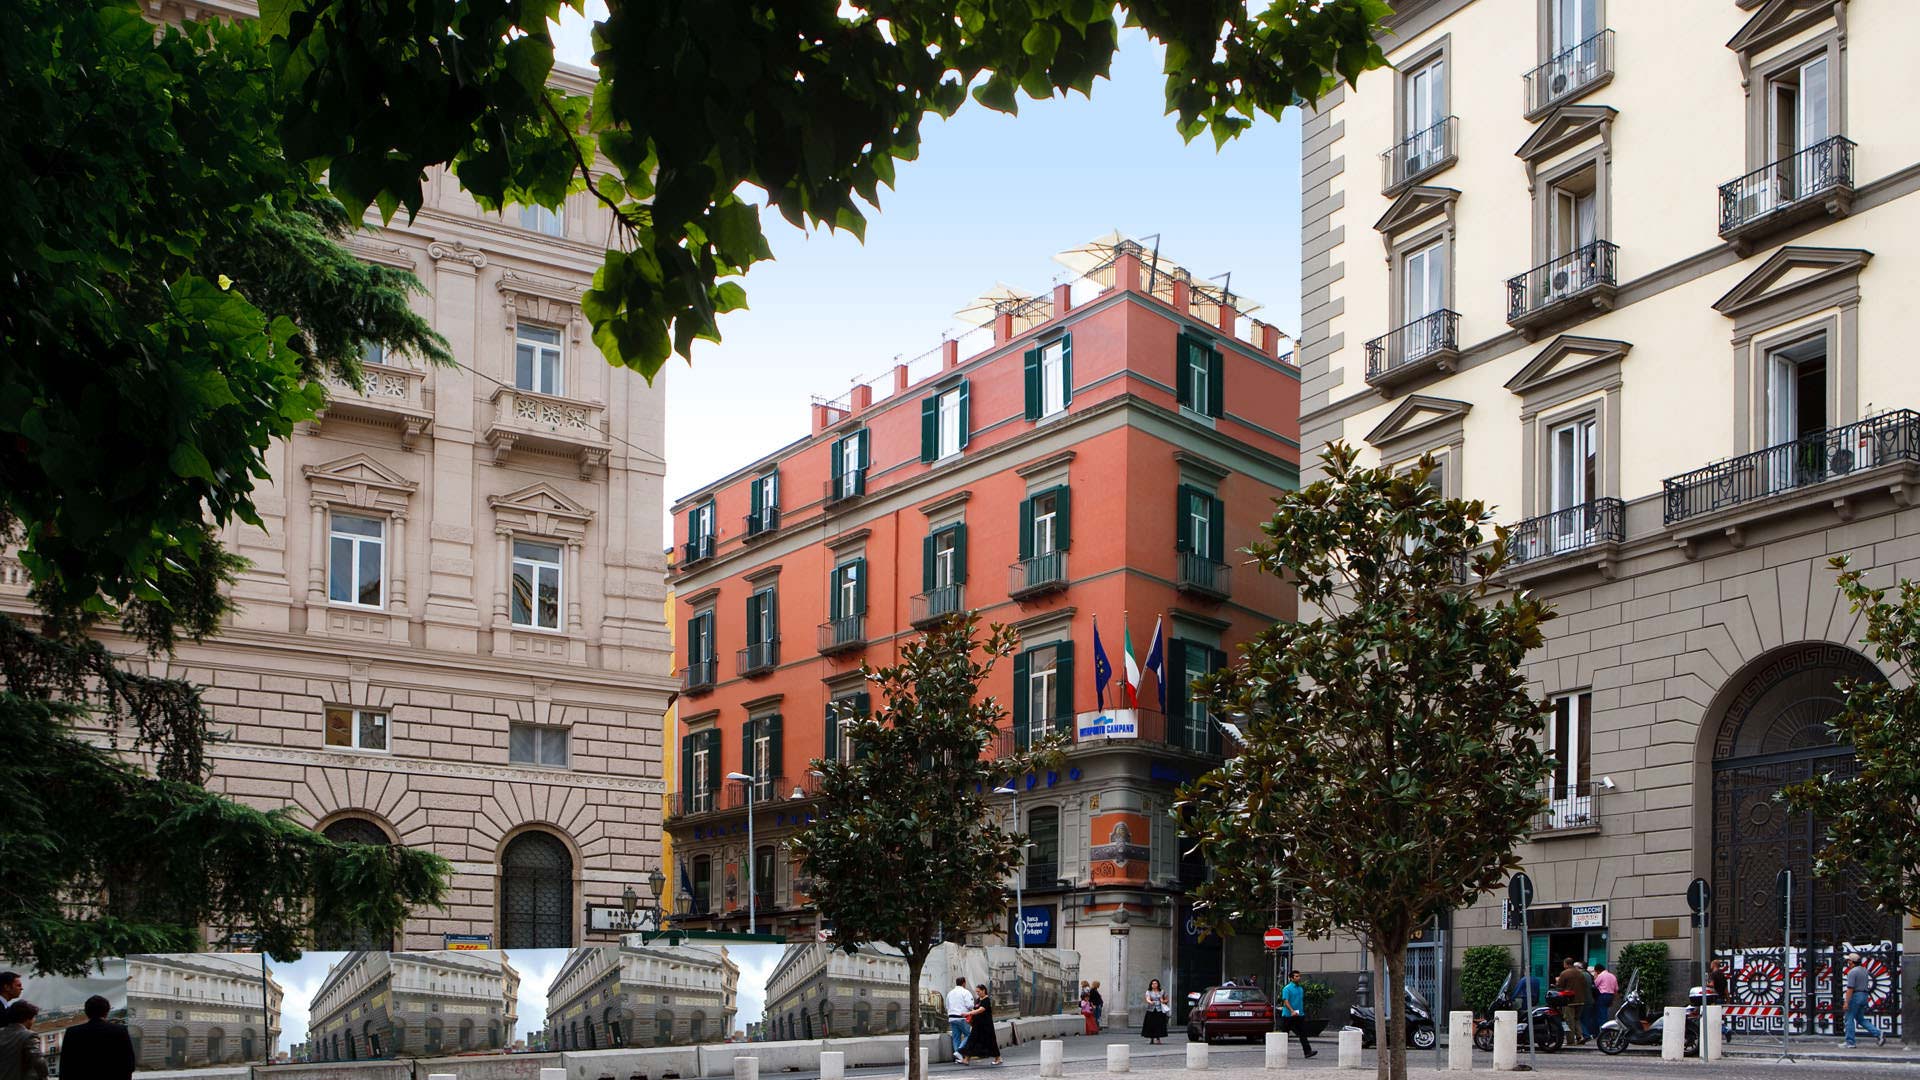 La Ciliegina Lifestyle Hotel Naples, vue de la piazza municipio